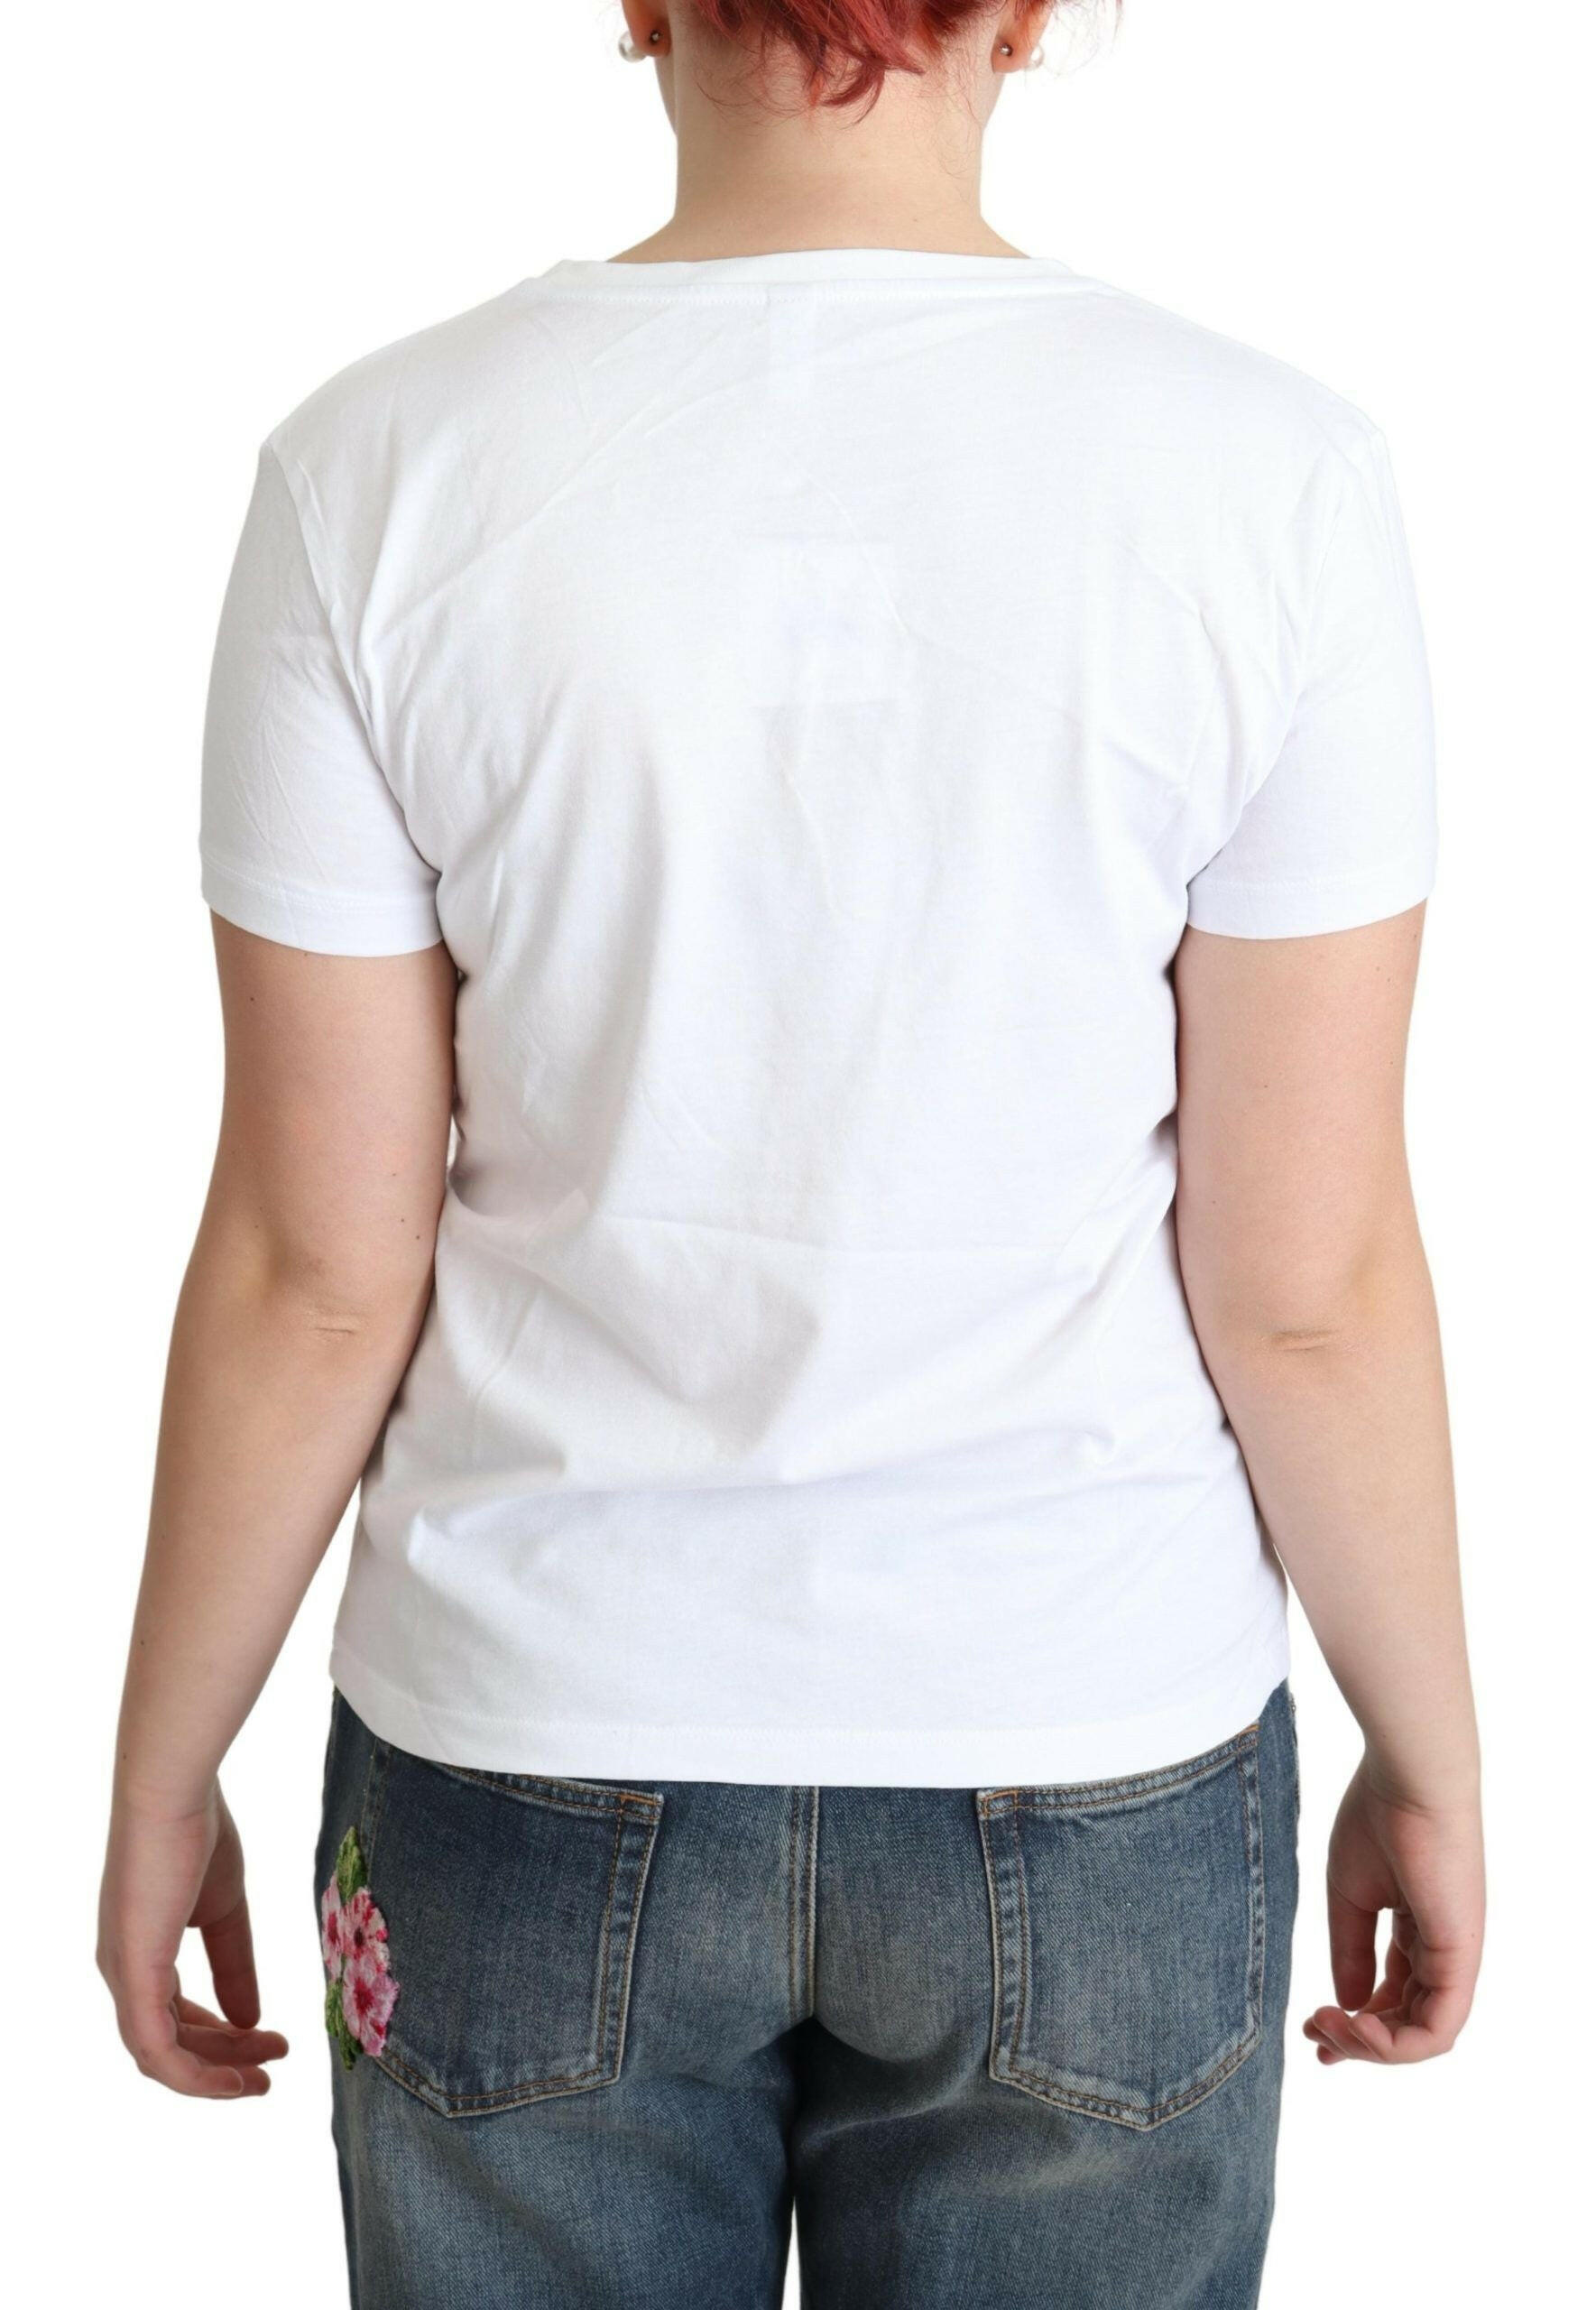 Moschino White Cotton Alphabet Letter Print Tops T-shirt - GENUINE AUTHENTIC BRAND LLC  